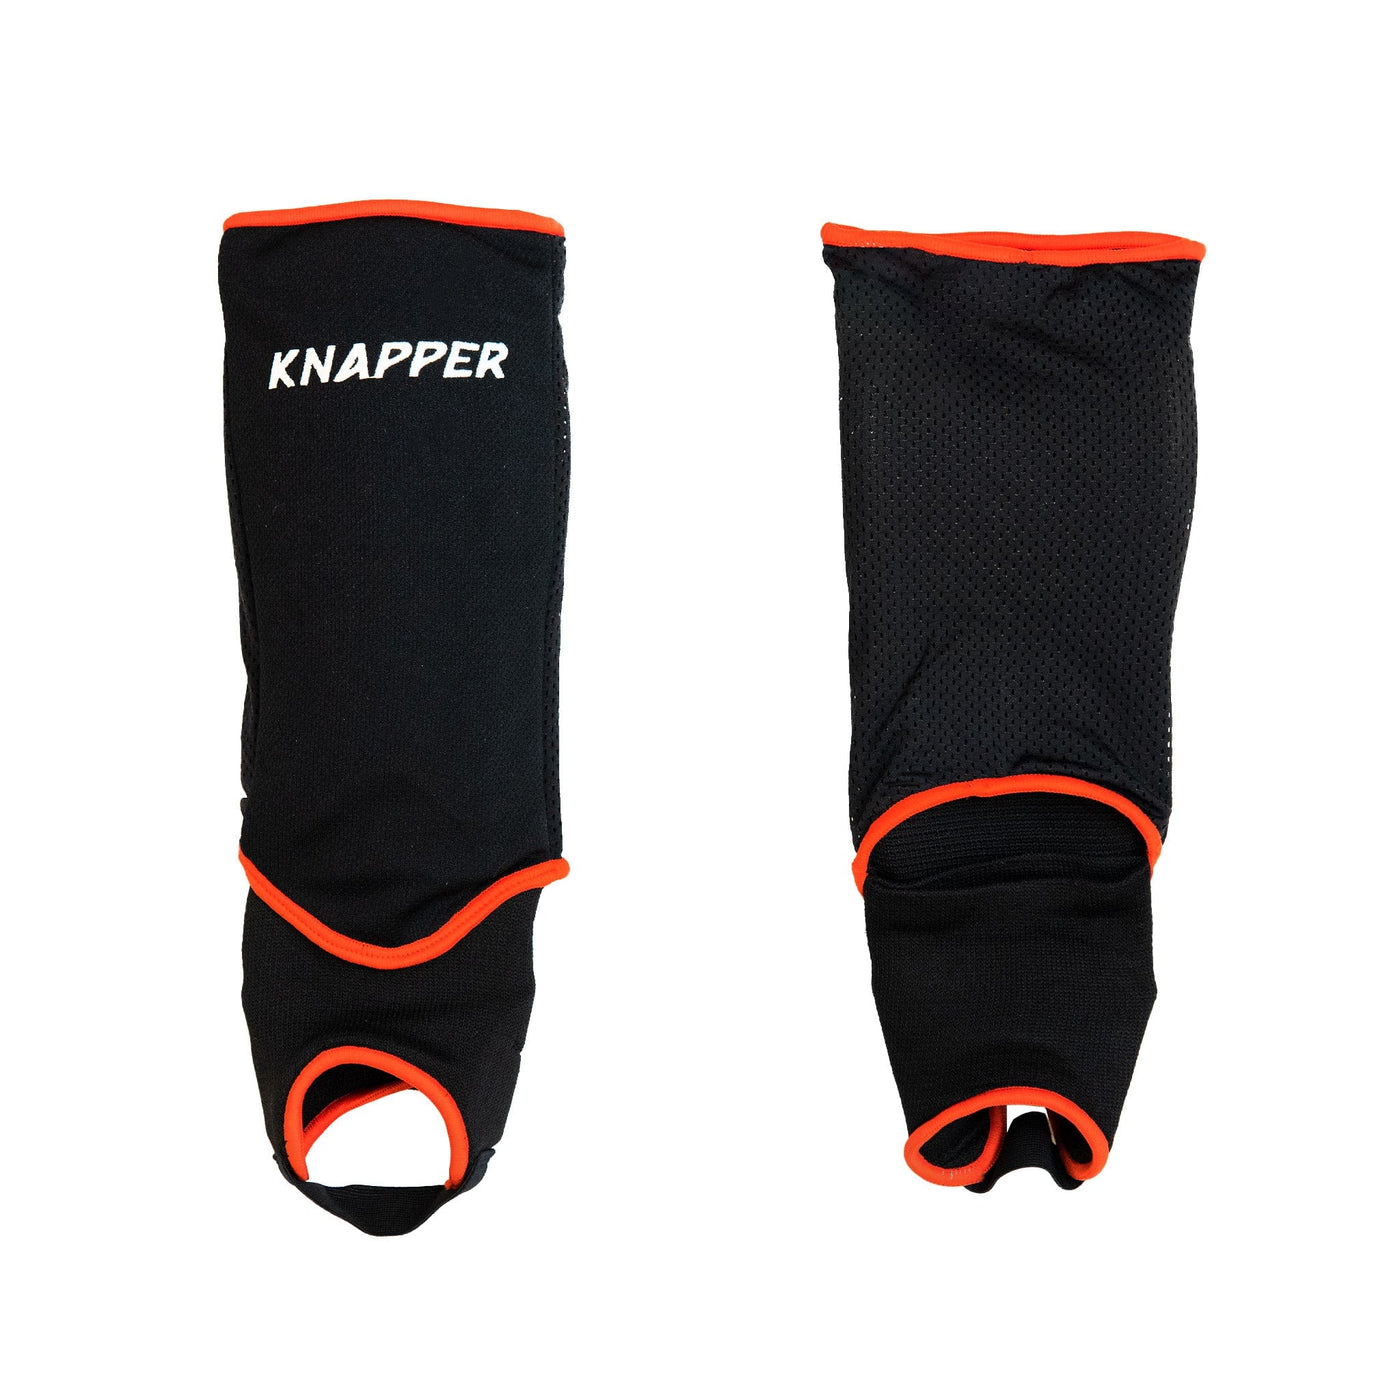 Knapper 501 No Knee Ball Hockey Shin Guards - The Hockey Shop Source For Sports